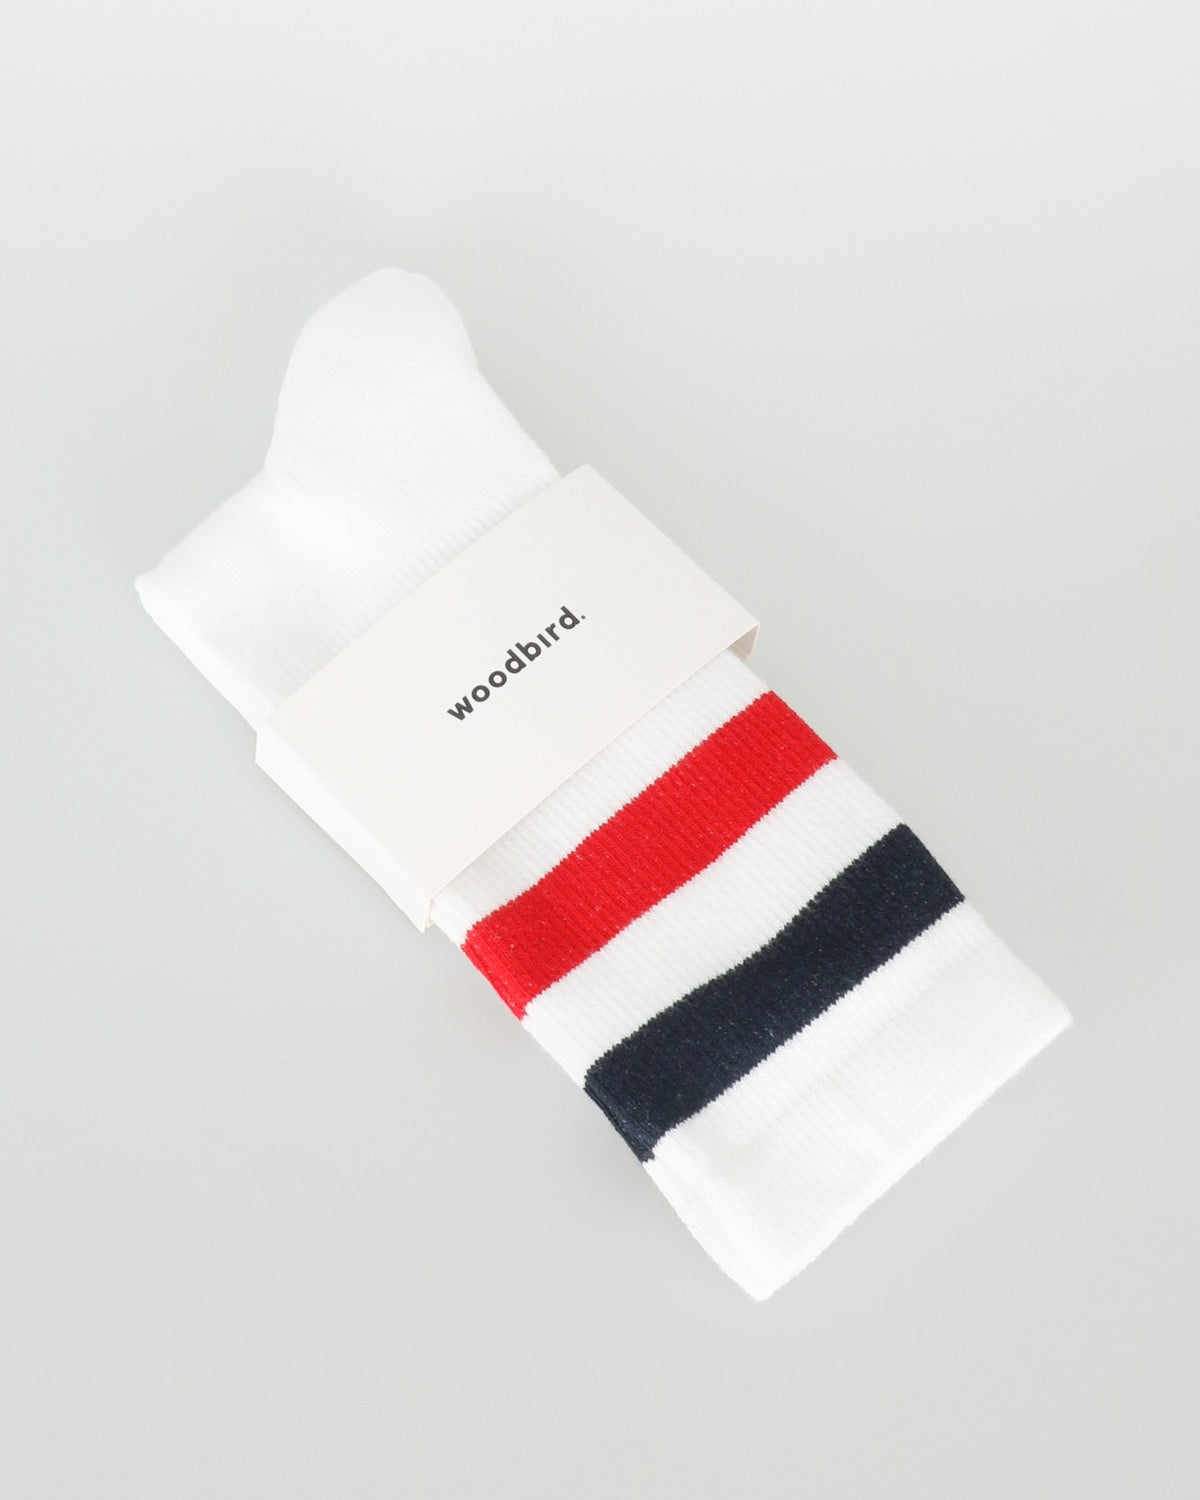 woodbird_tennis socks_white navy red navy_1_2